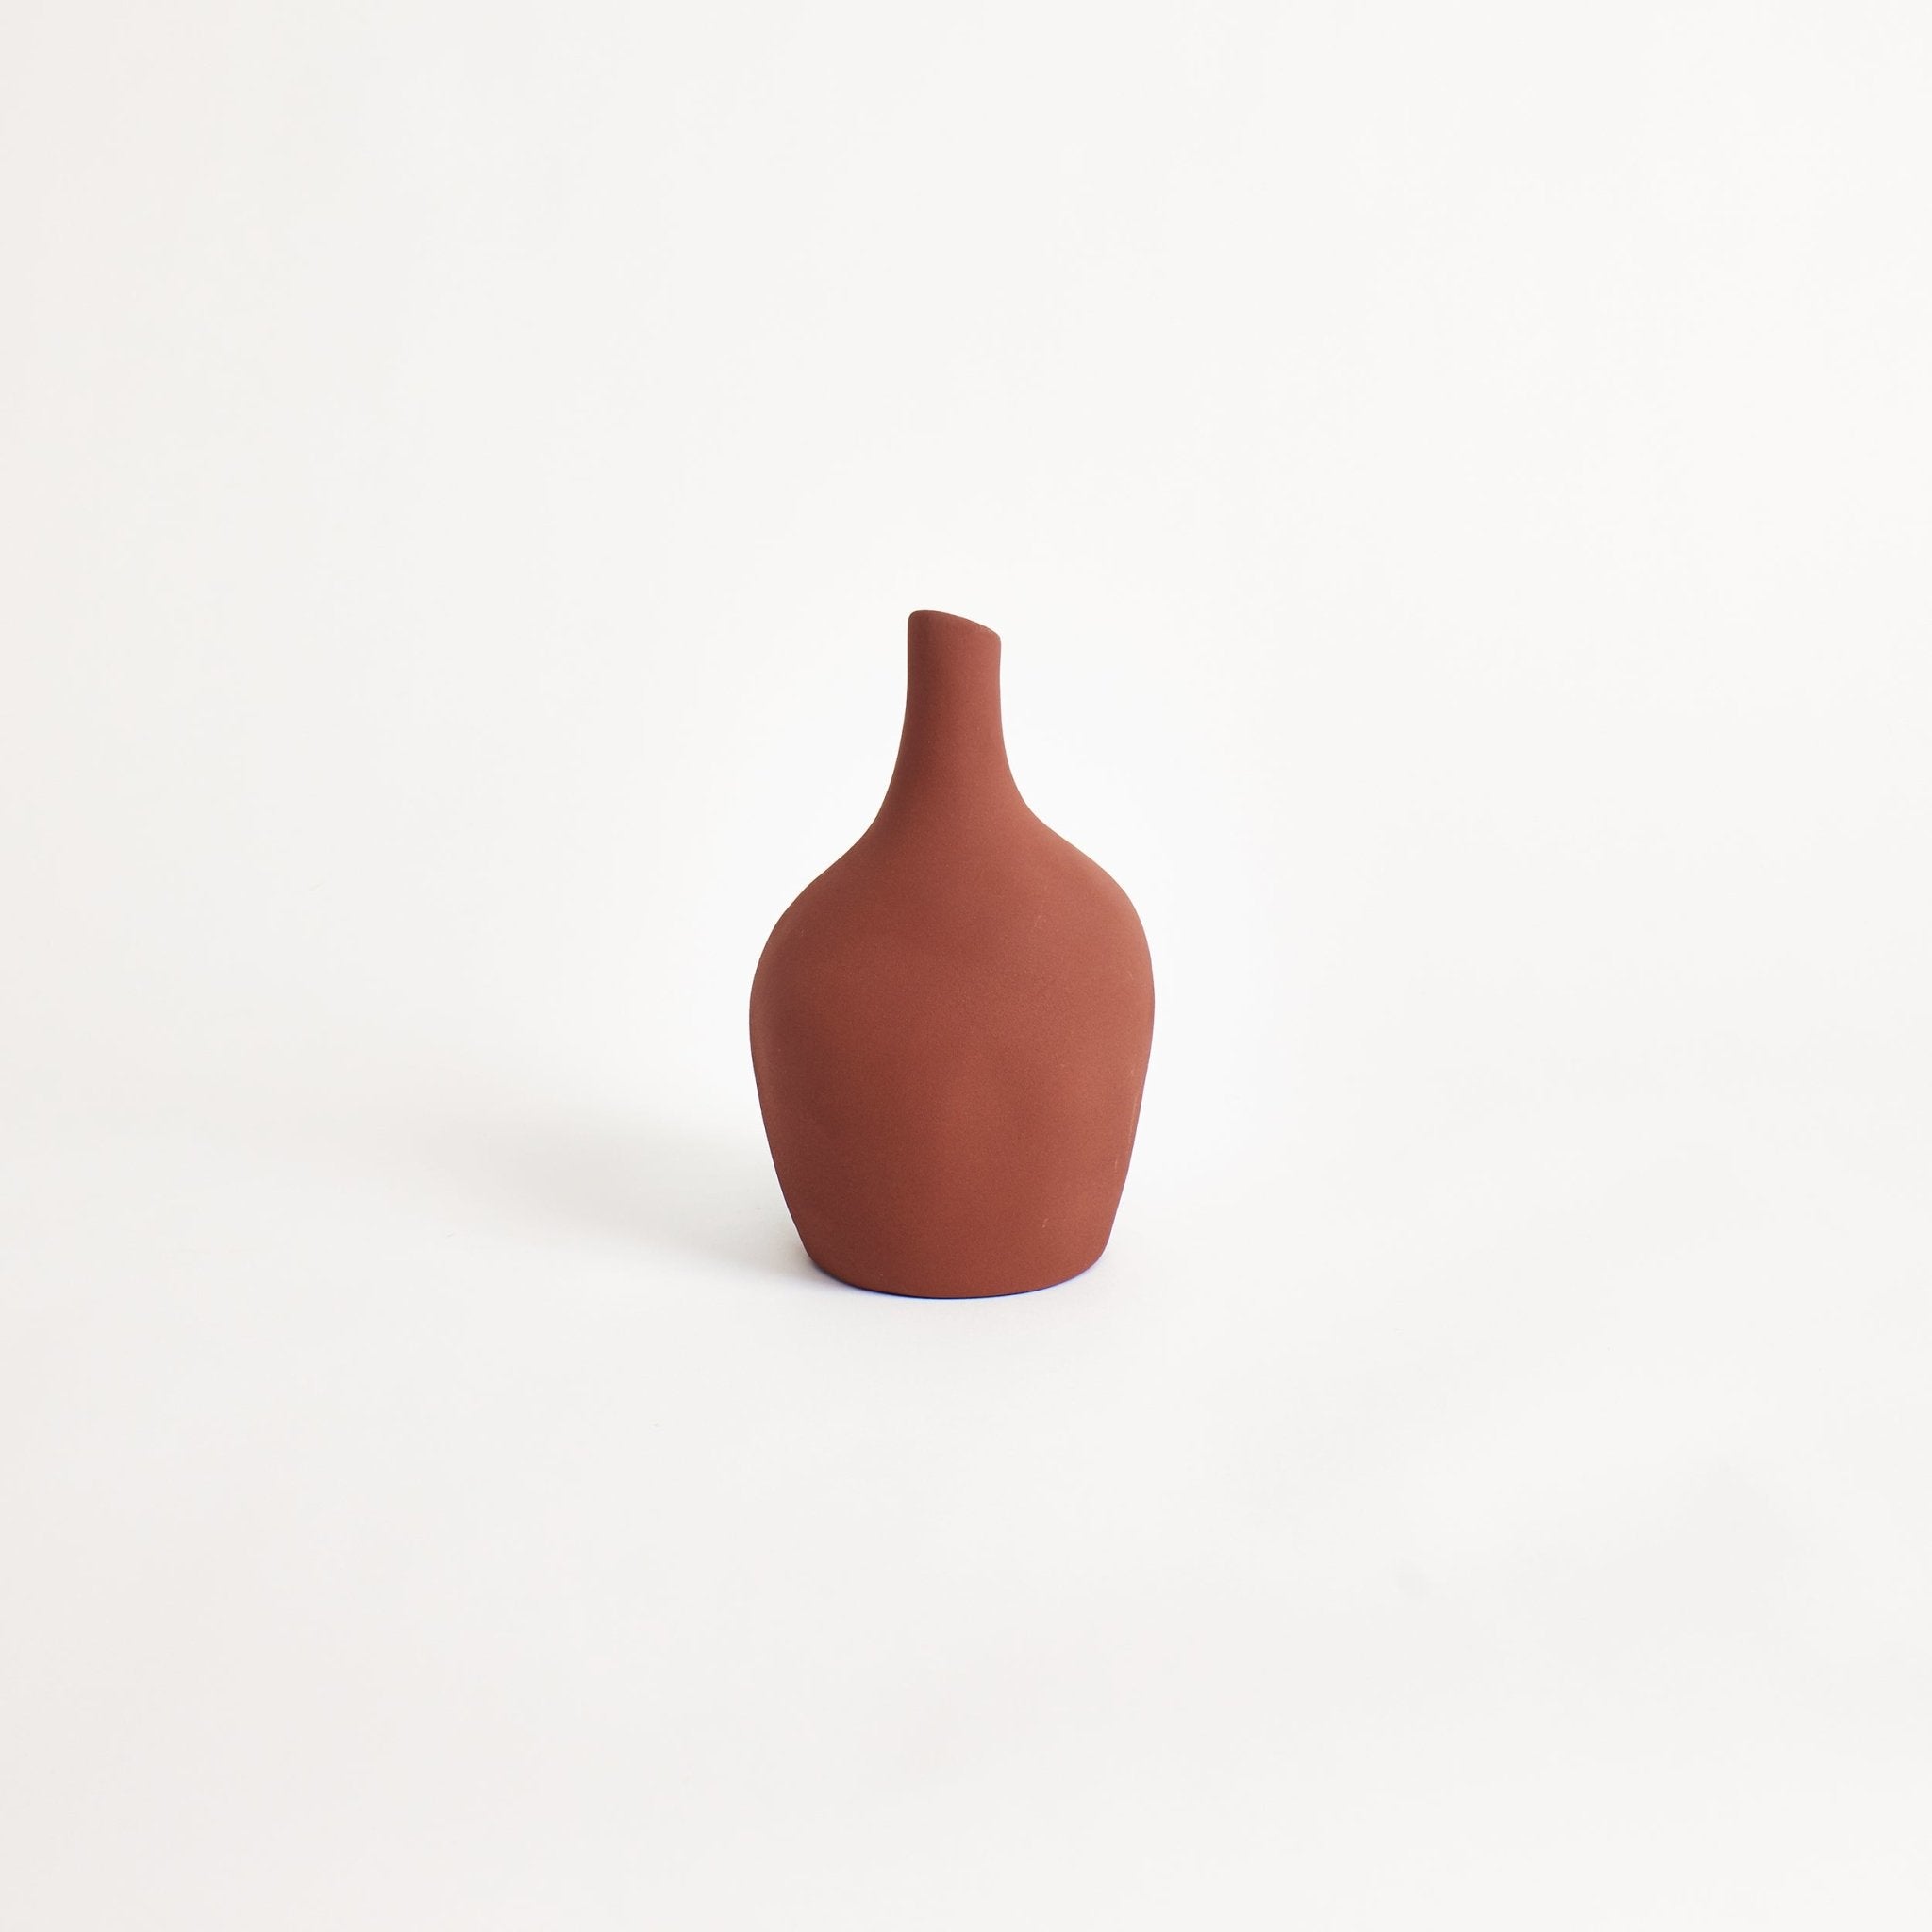 Mini Sailor Vase - Brick color vase from Project 213A